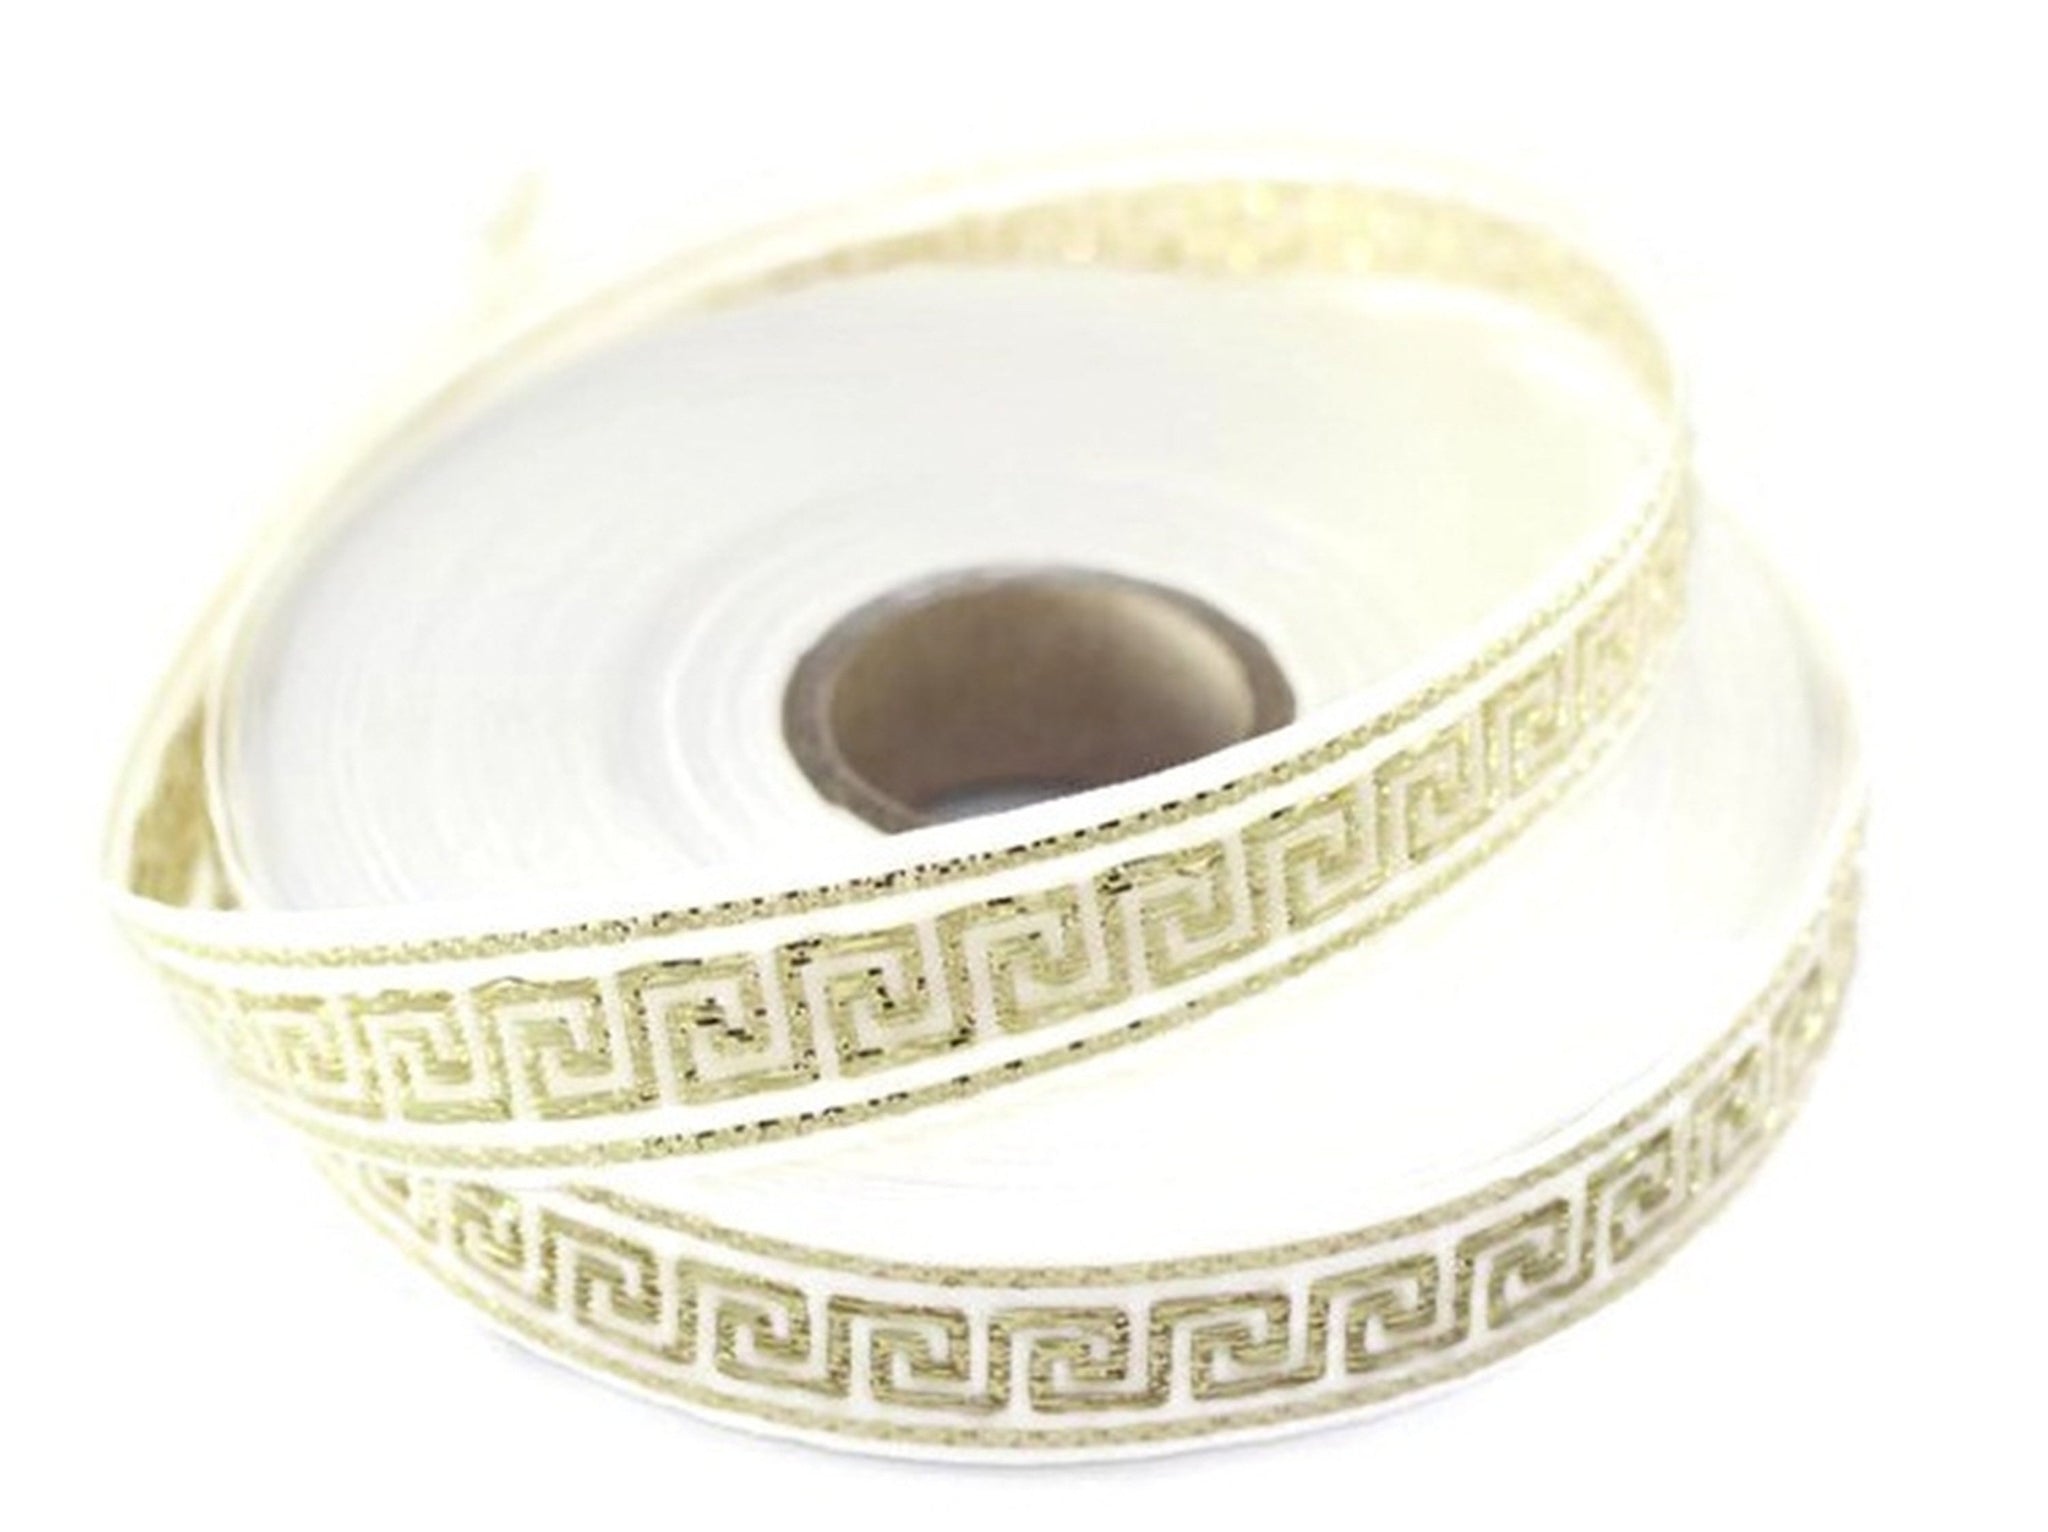 15 mm White&Gold Greek key Jacquard ribbons (0.59 inches, Jacquard trim, Sewing trim, geometric ribbon, trimming, dog collars